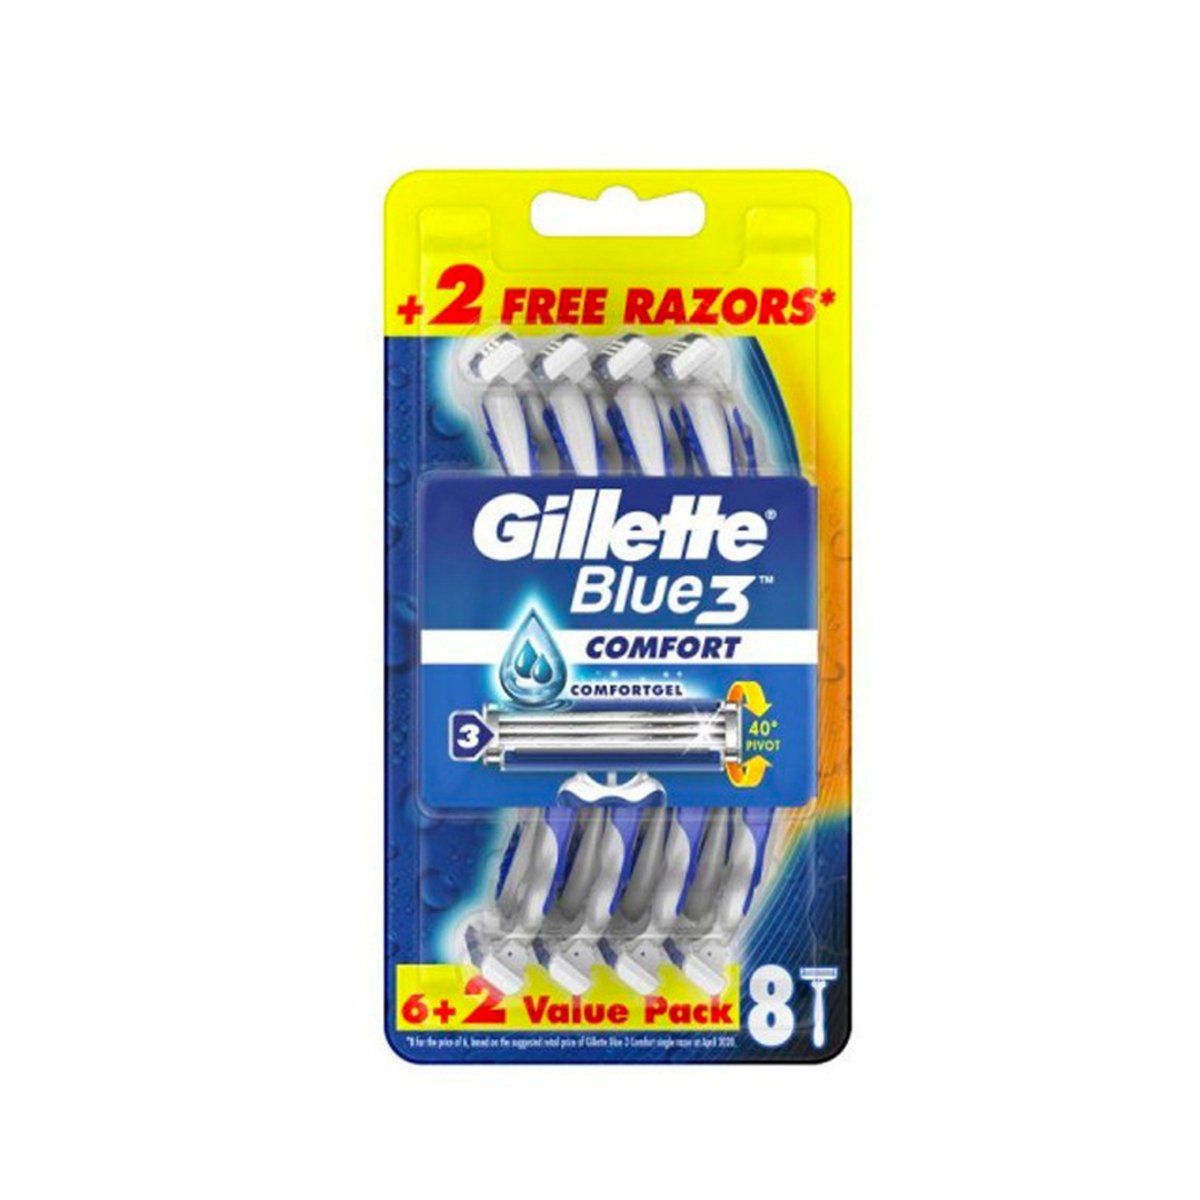 Gillette Mens Blue 3 Sensitiv Disposable Razors 8's